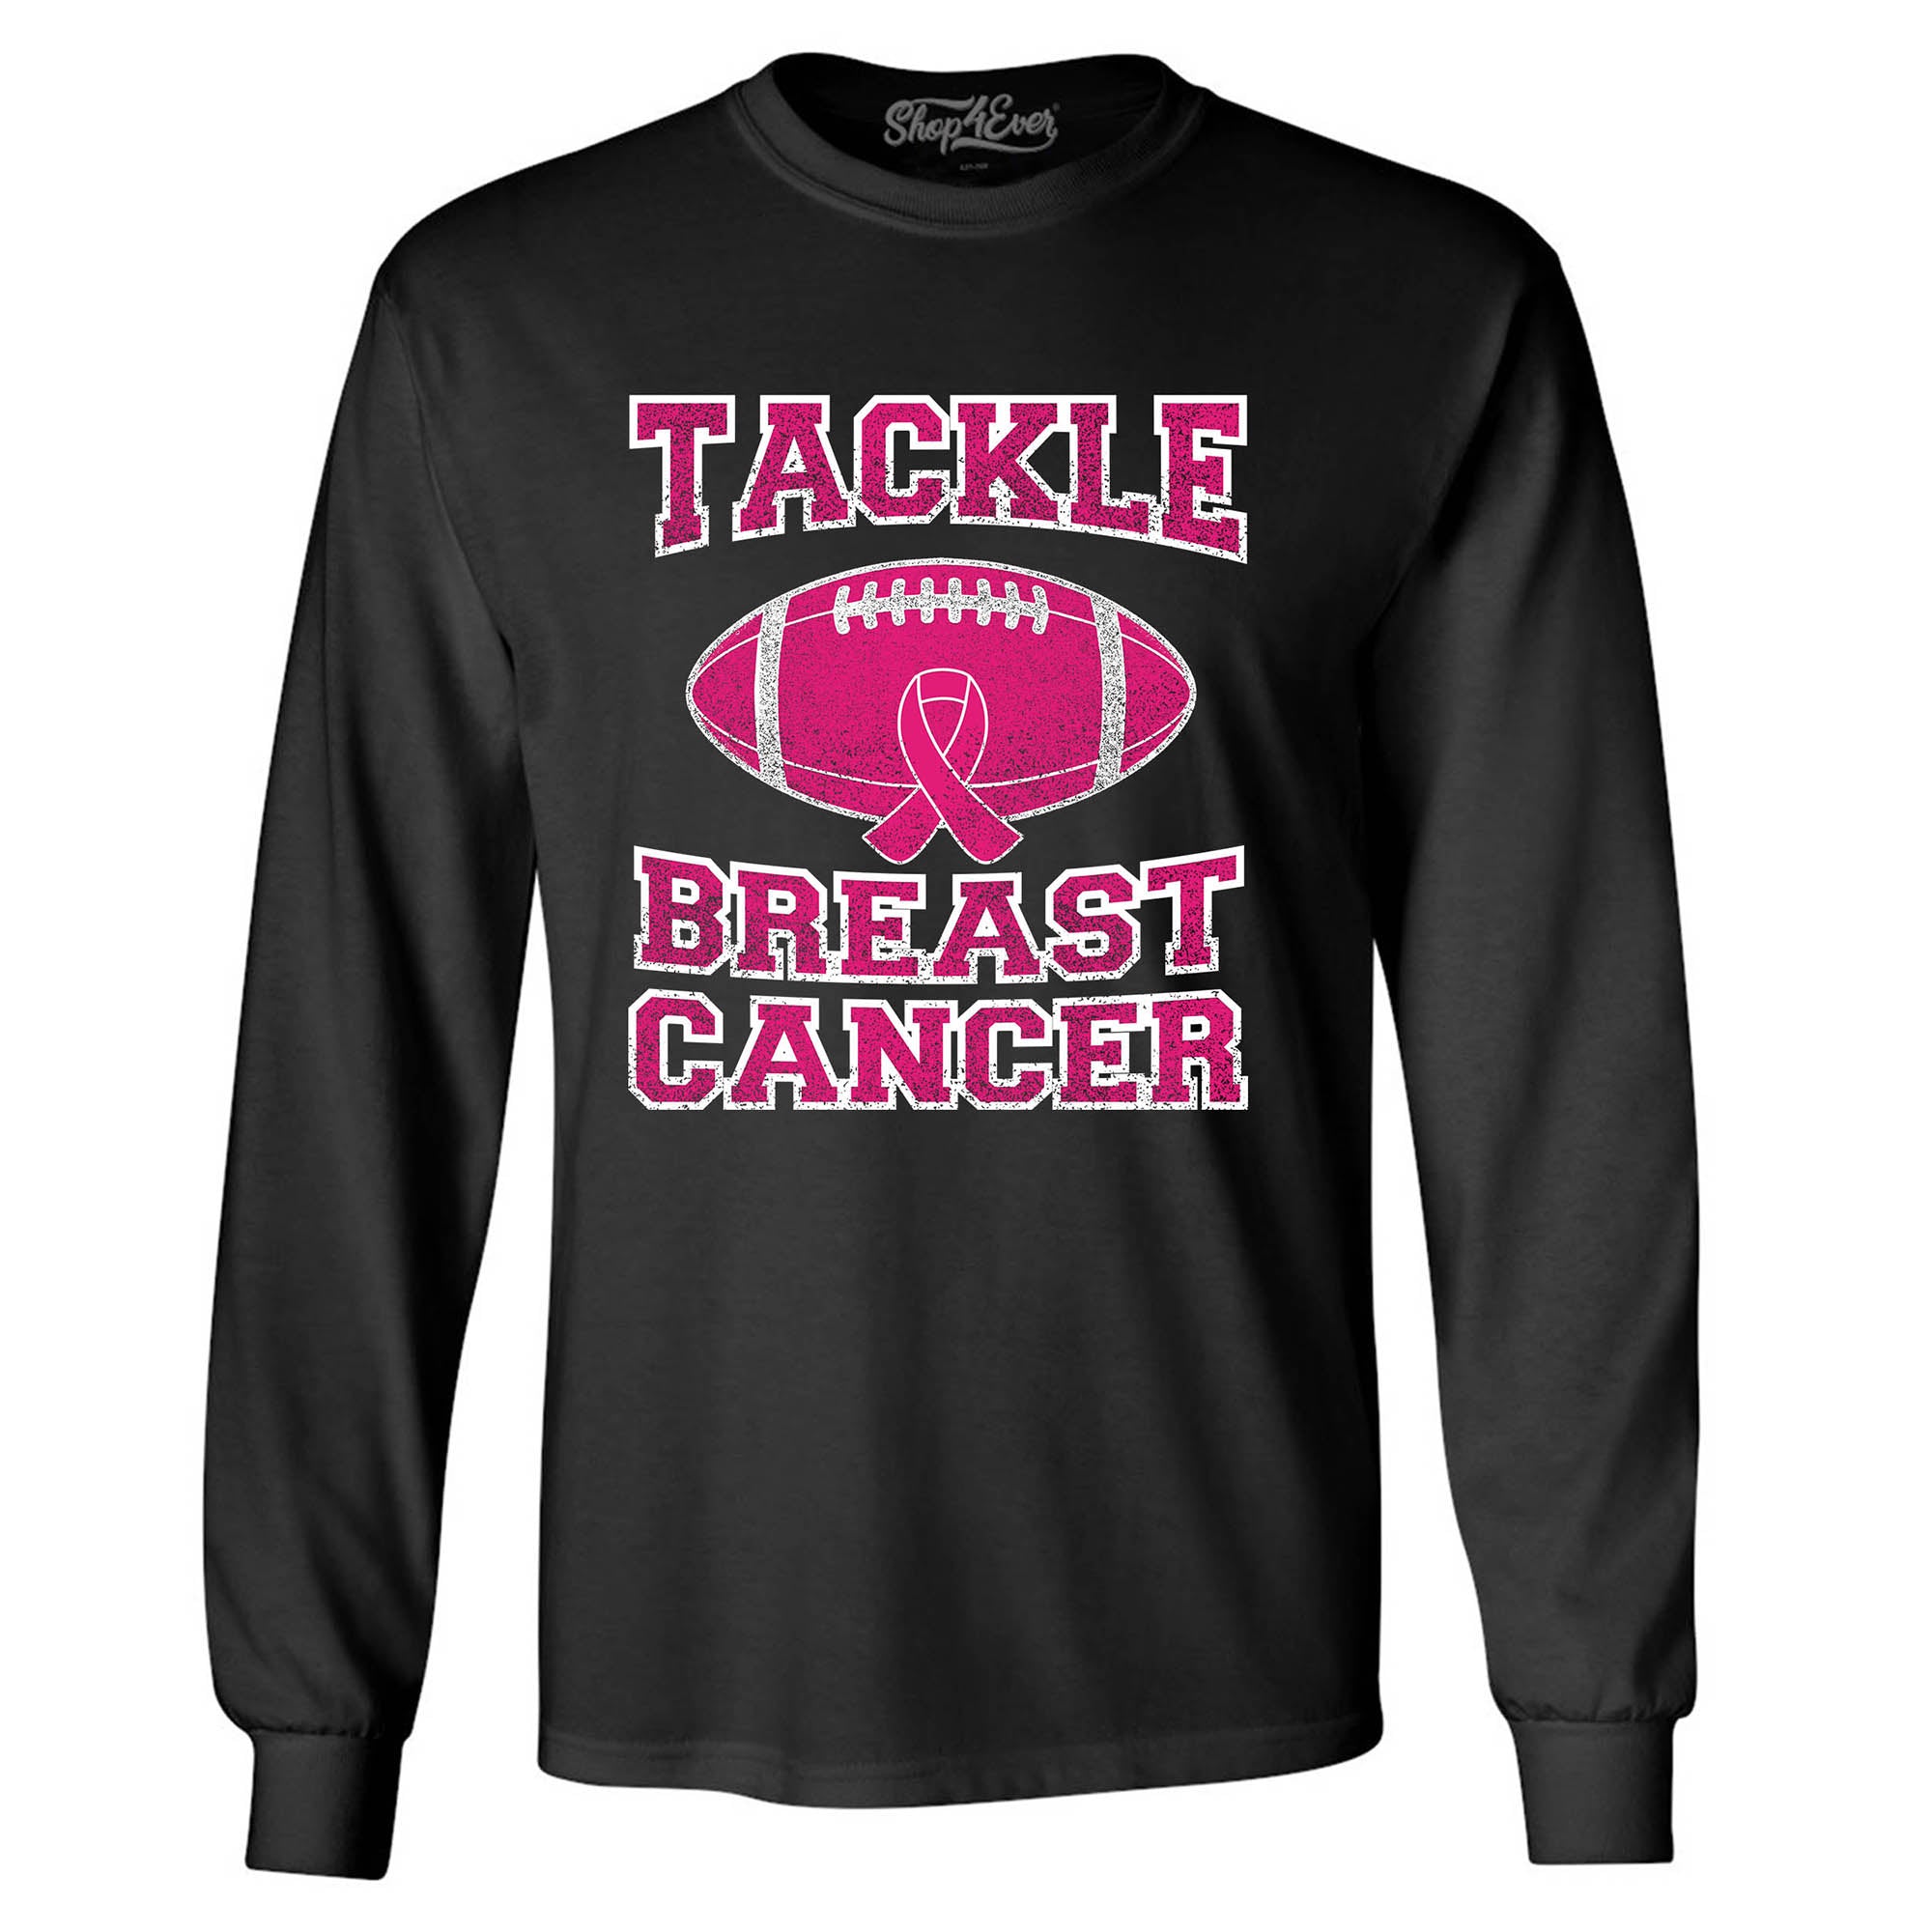 Tackle Breast Cancer Long Sleeve Shirt Breast Cancer Awareness Shirts